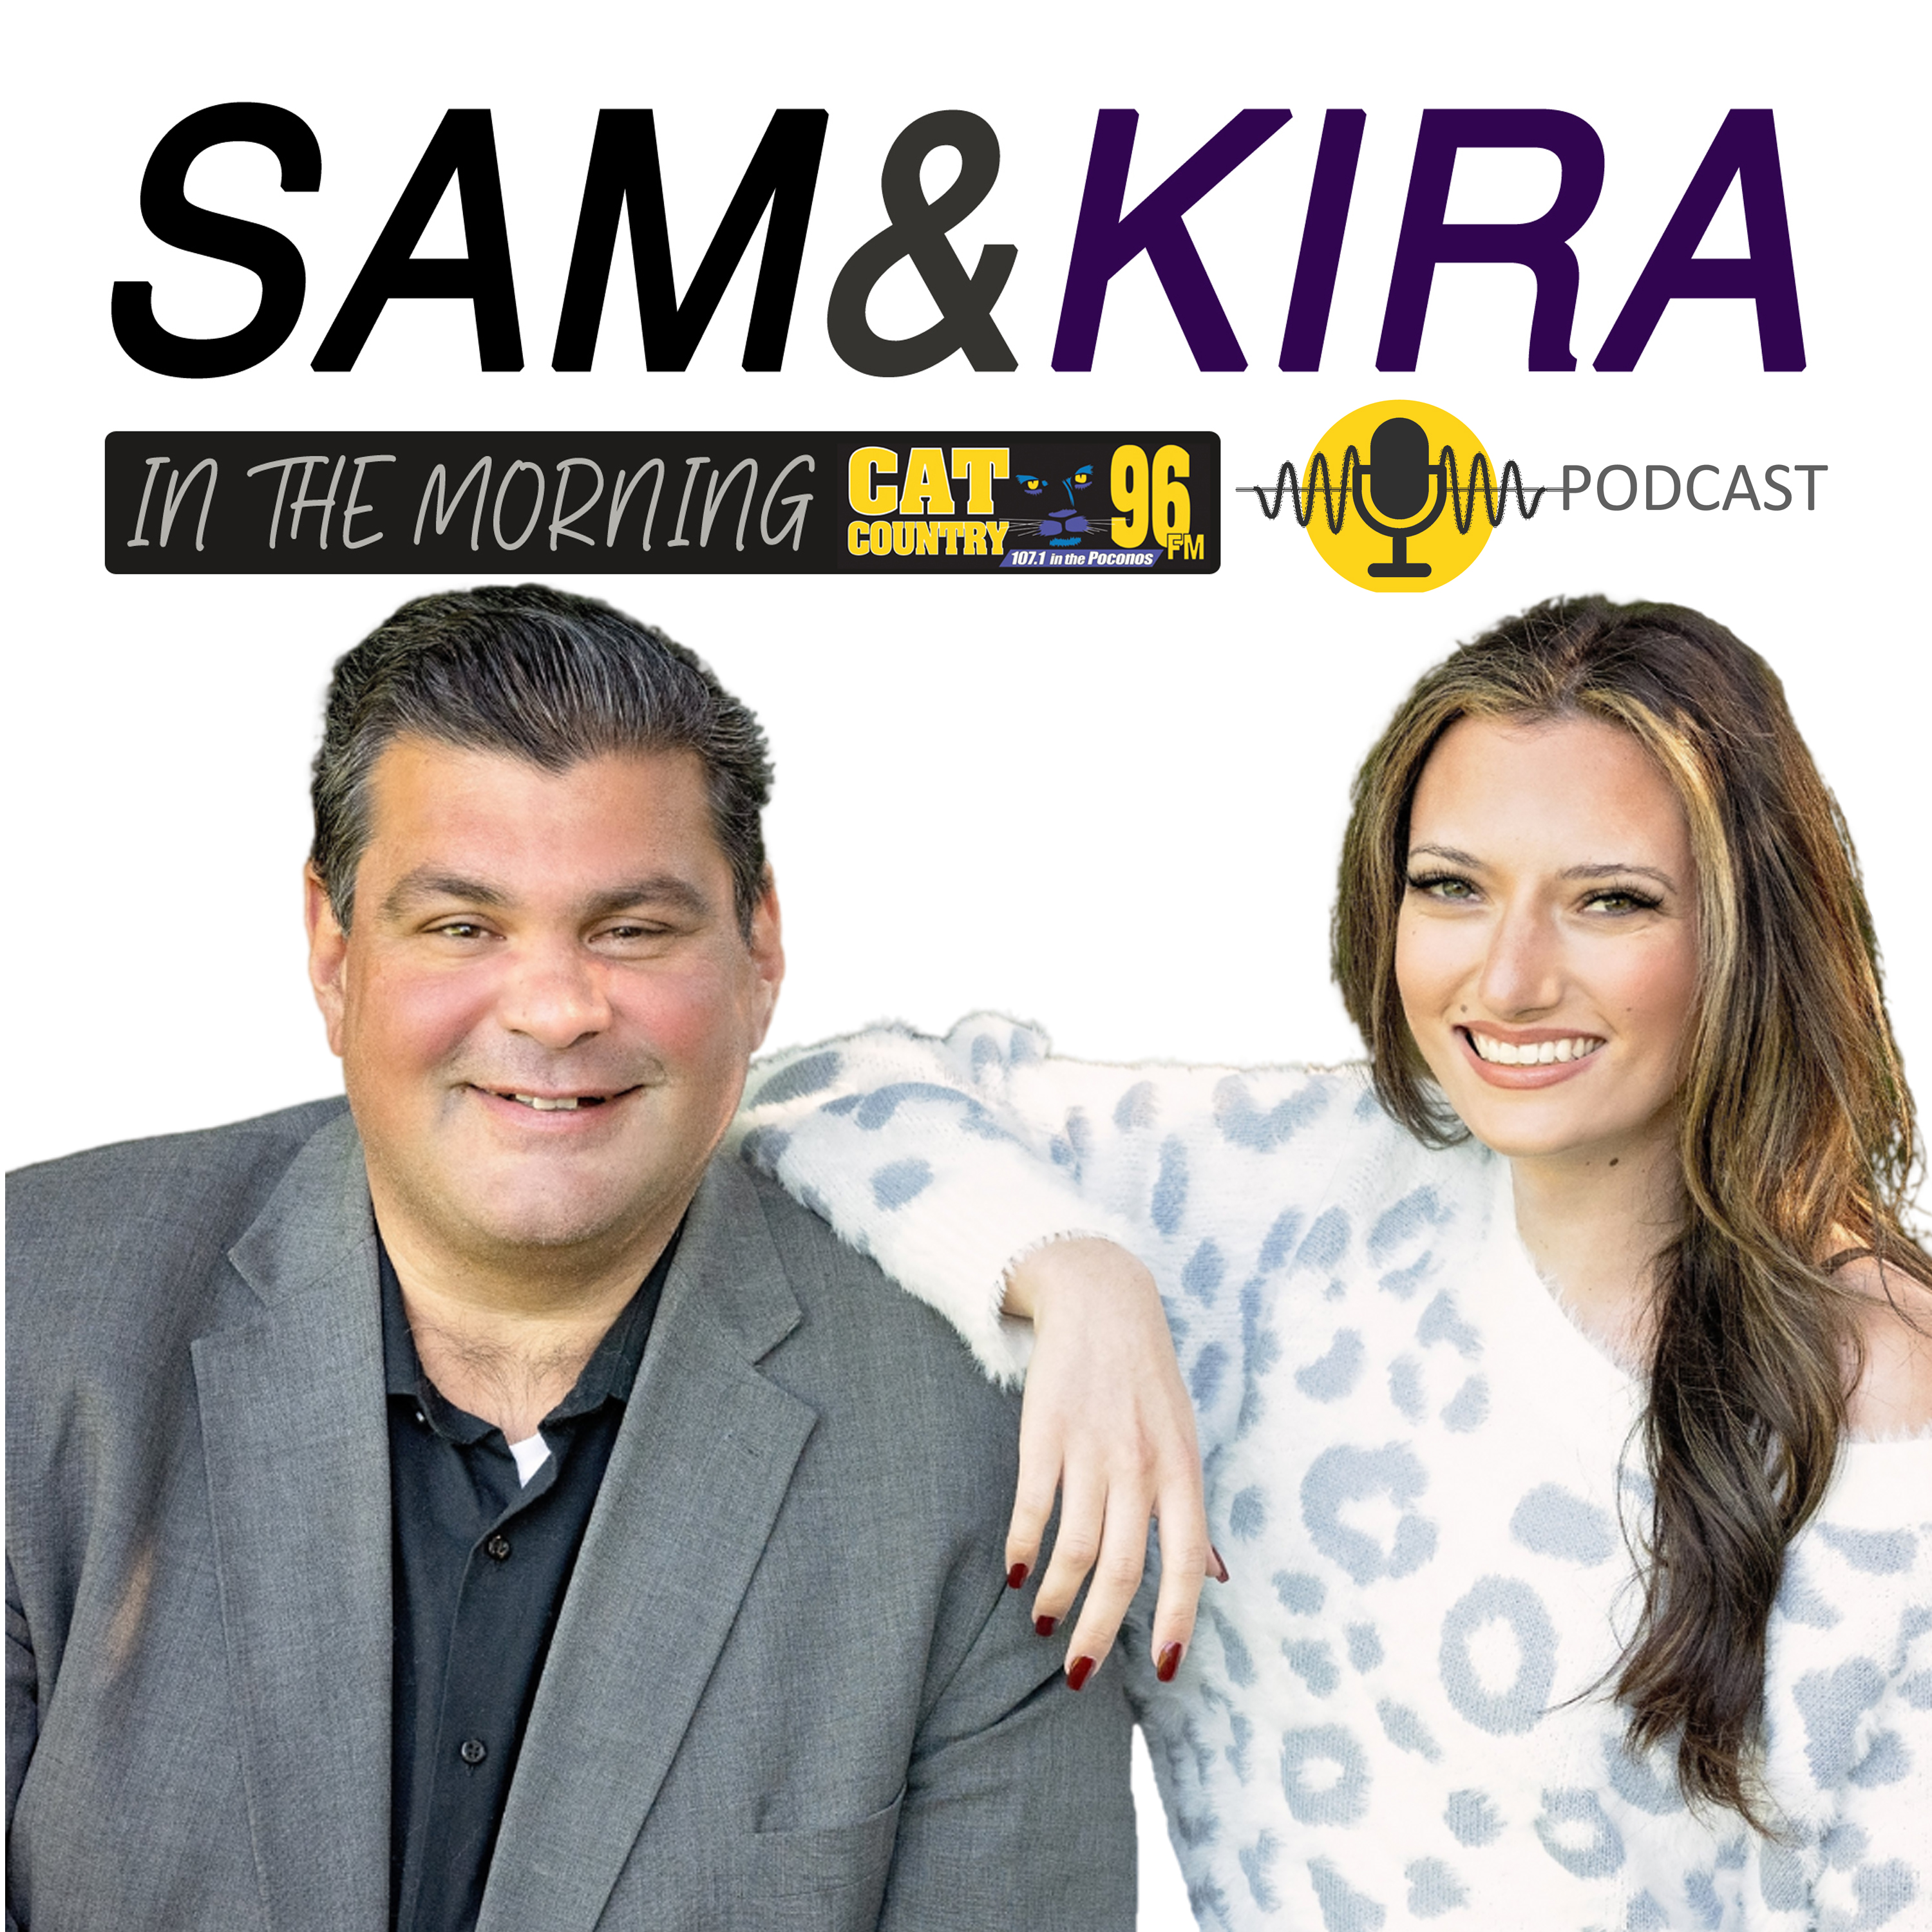 Sam & Kira After Breakfast: Dumbest Things You Learned in School